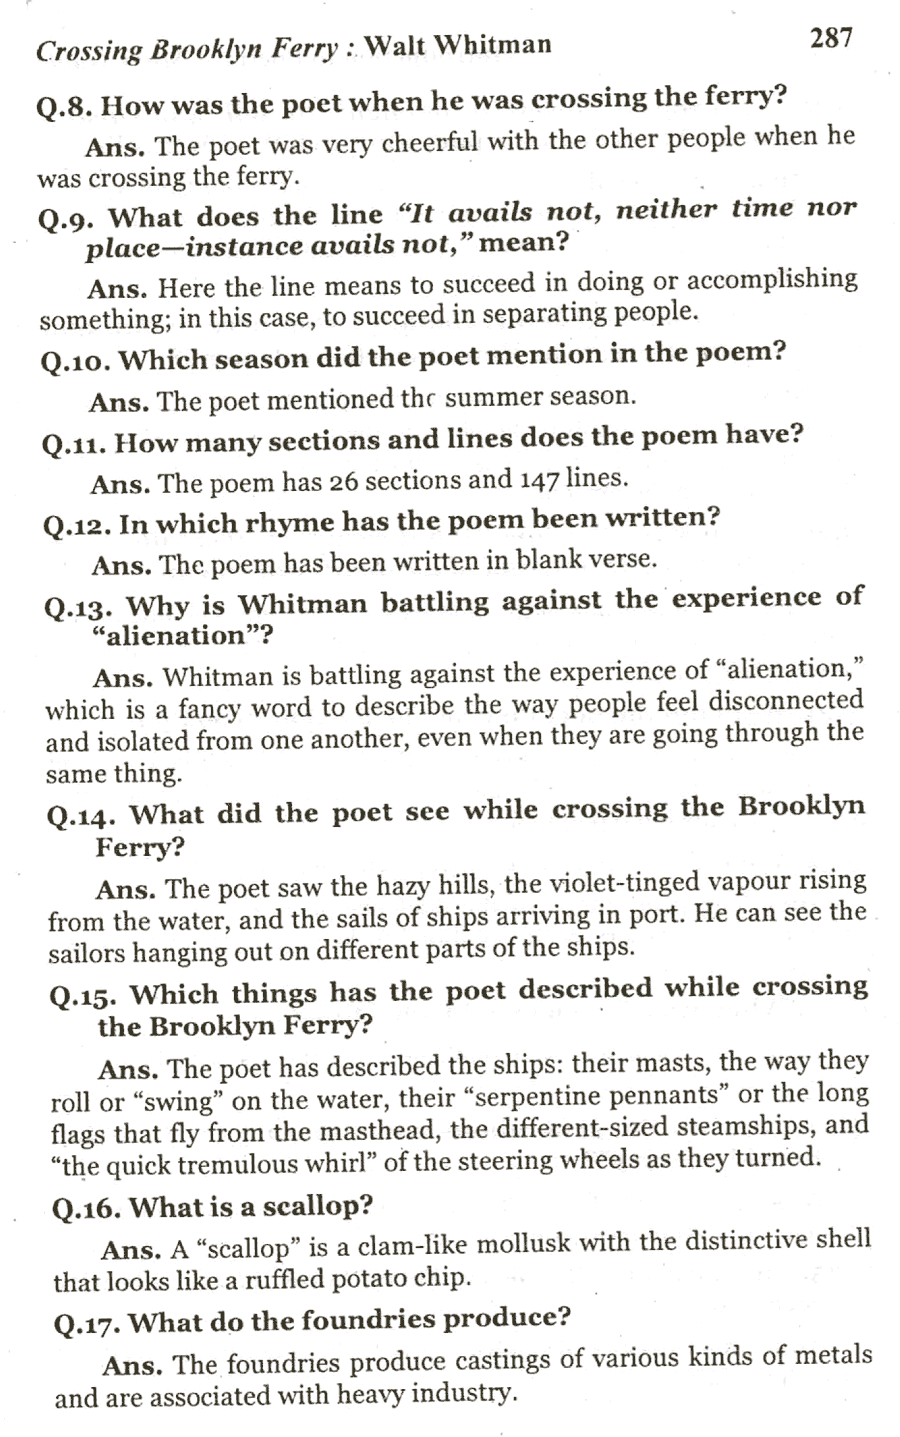 CrossingBrooklyn Ferry – Walt Whitman - Brief Questions with Answers